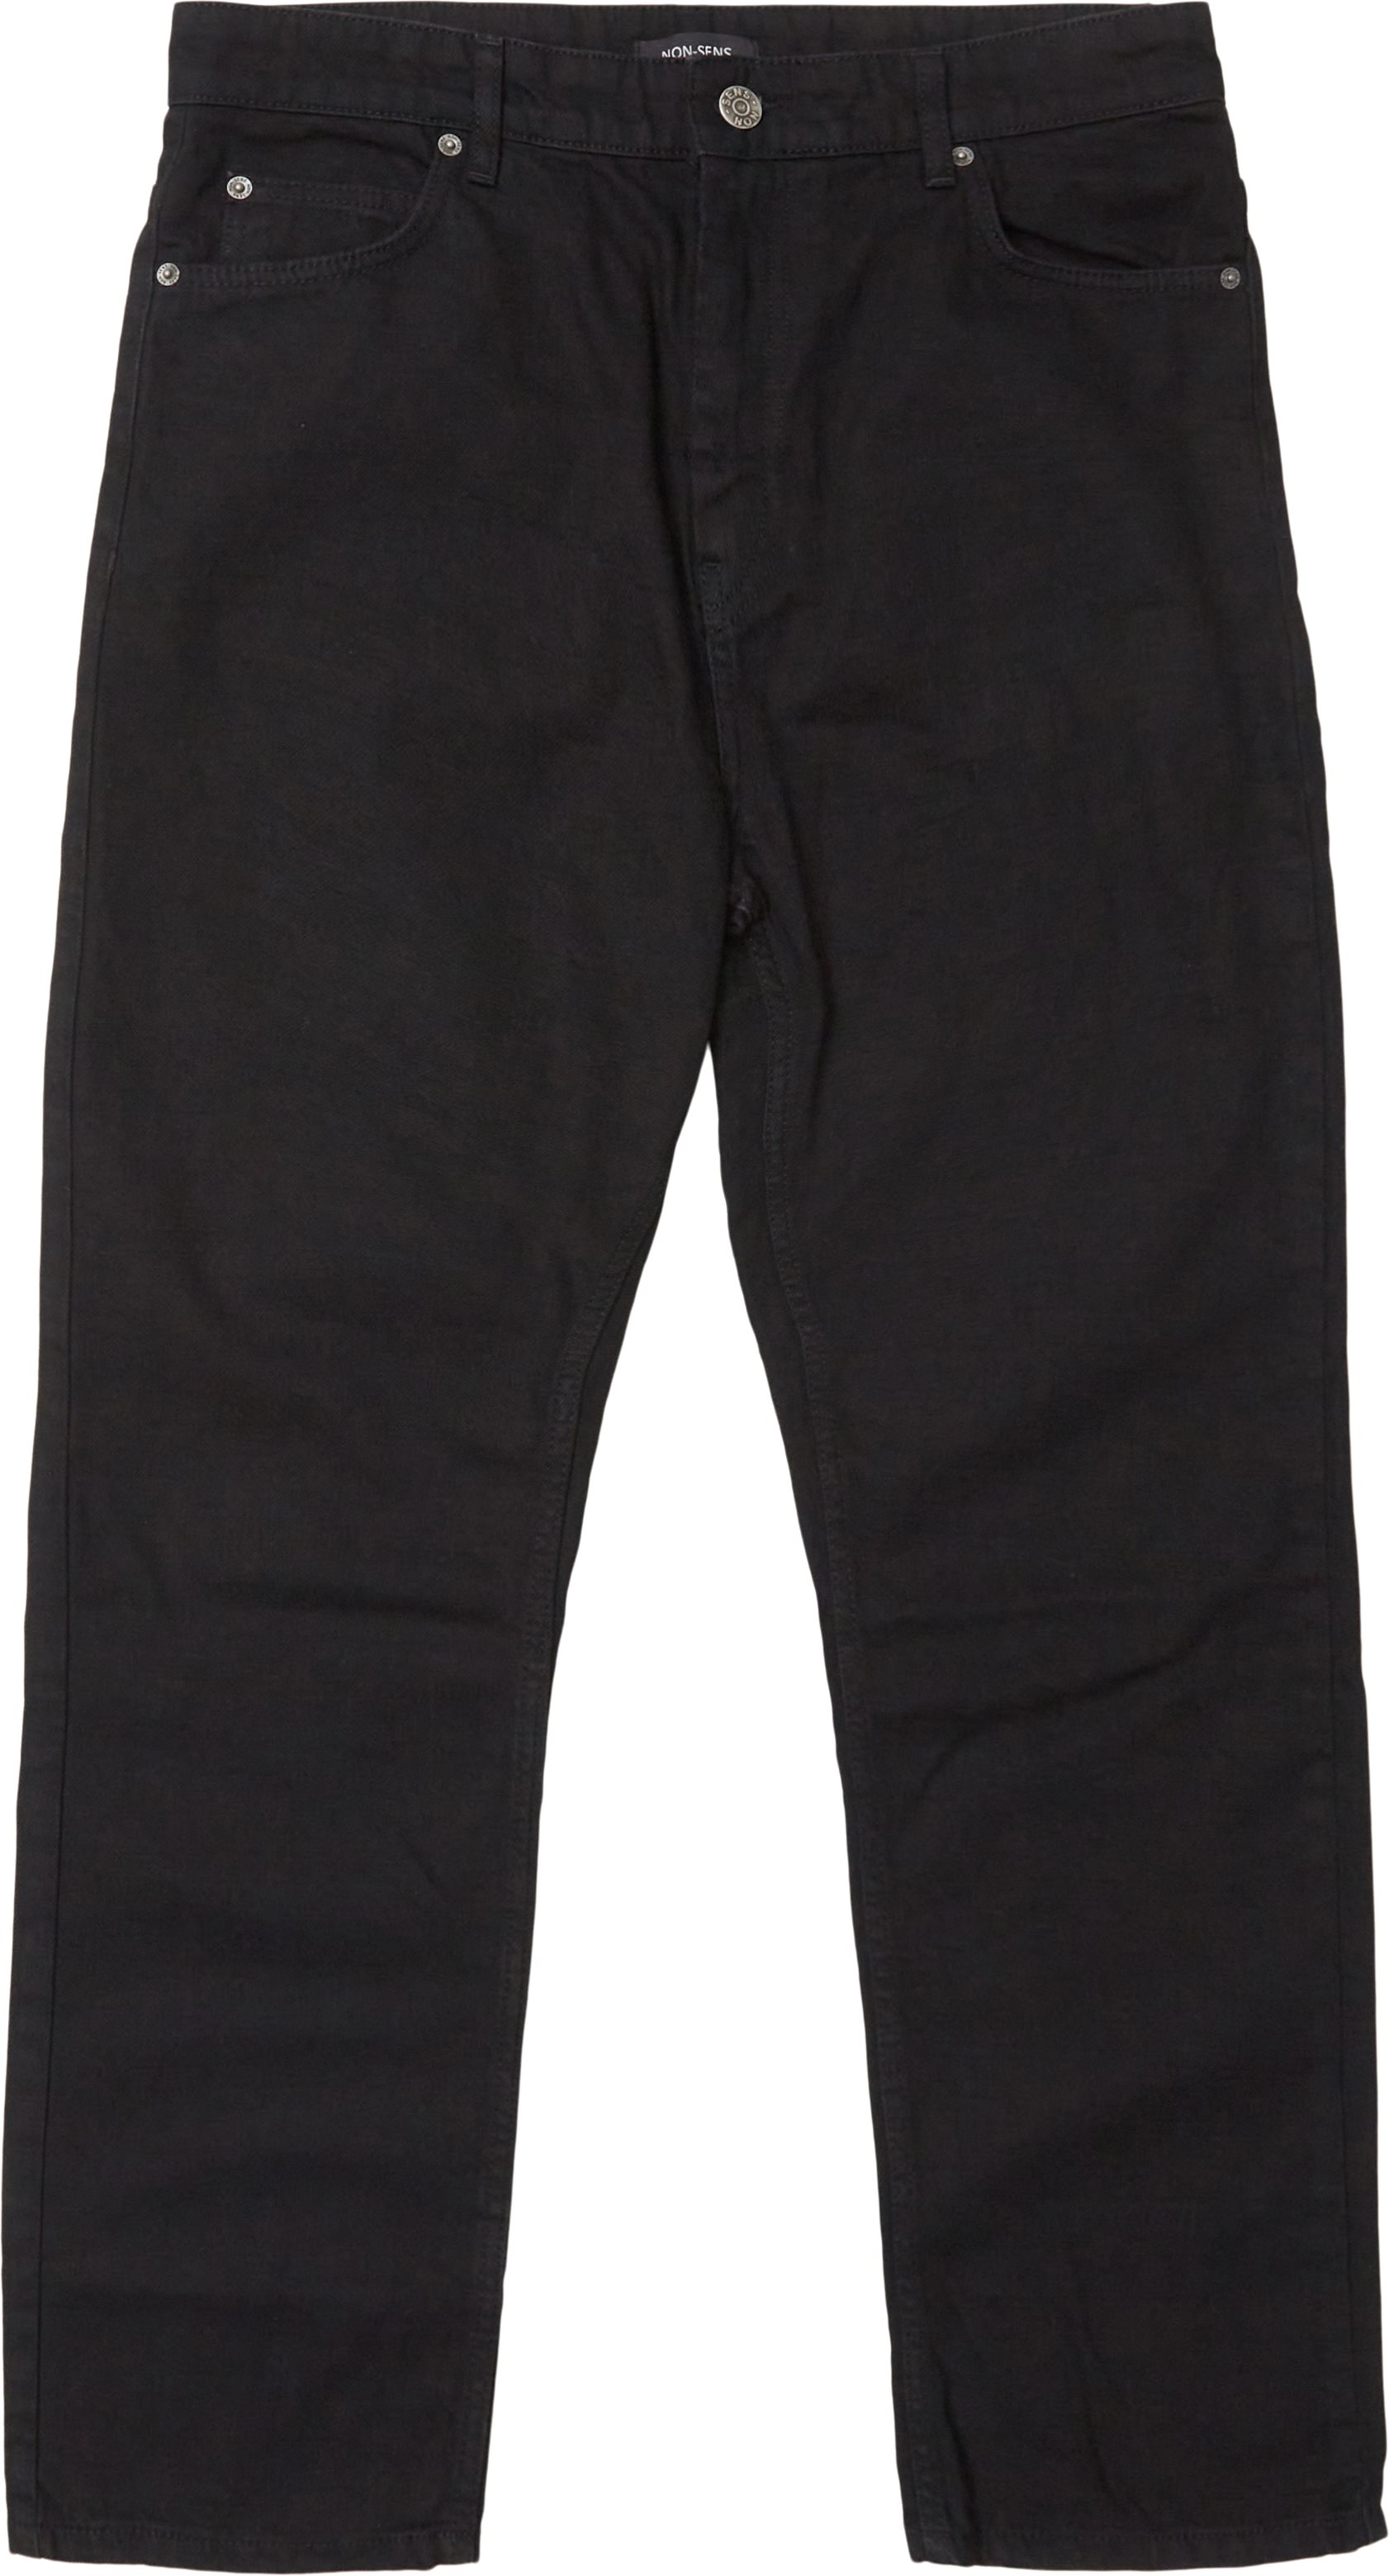 Vermont Jeans - Jeans - Straight fit - Black